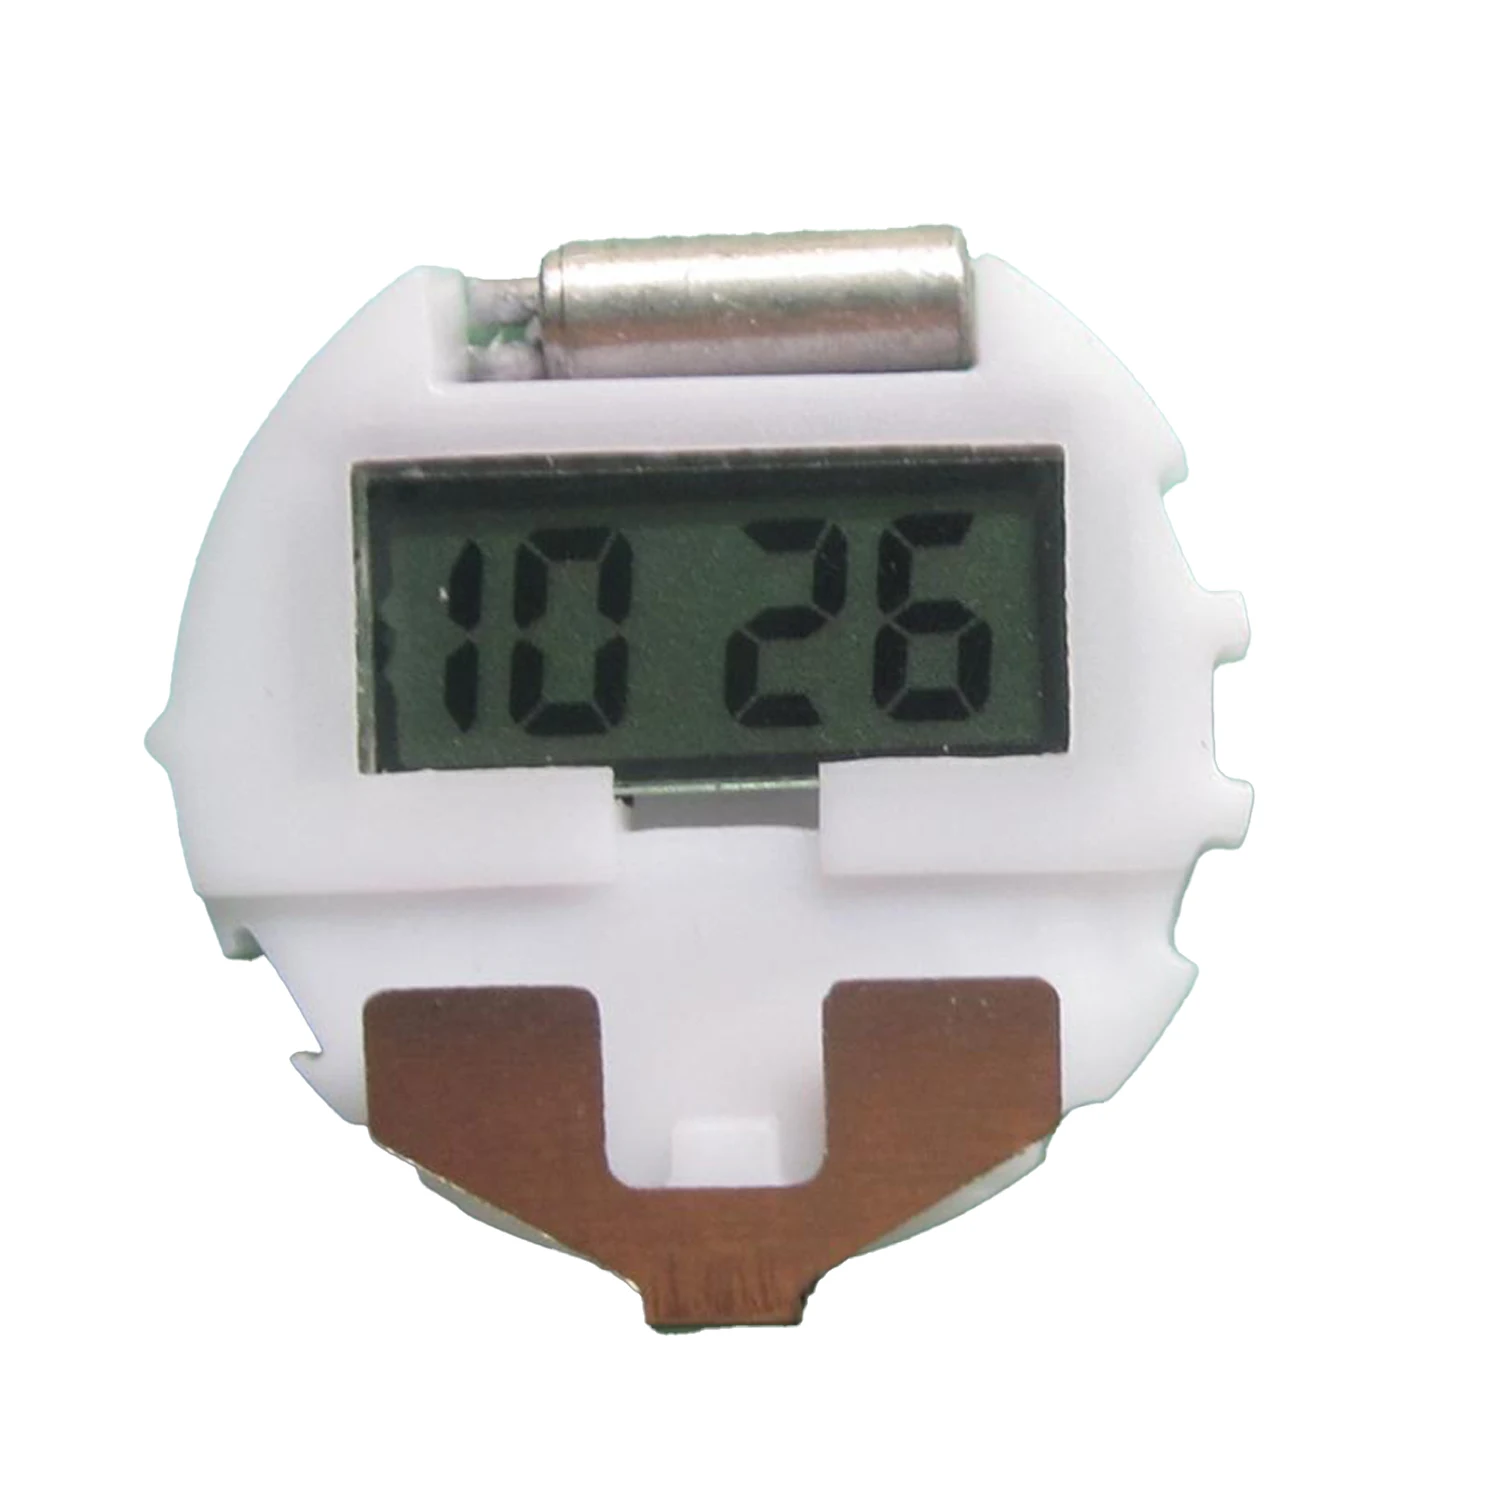 

100pcs Digital Watches Electronic Clock 22mm watch core Electronic Clock Module KIT DIY Science Kit